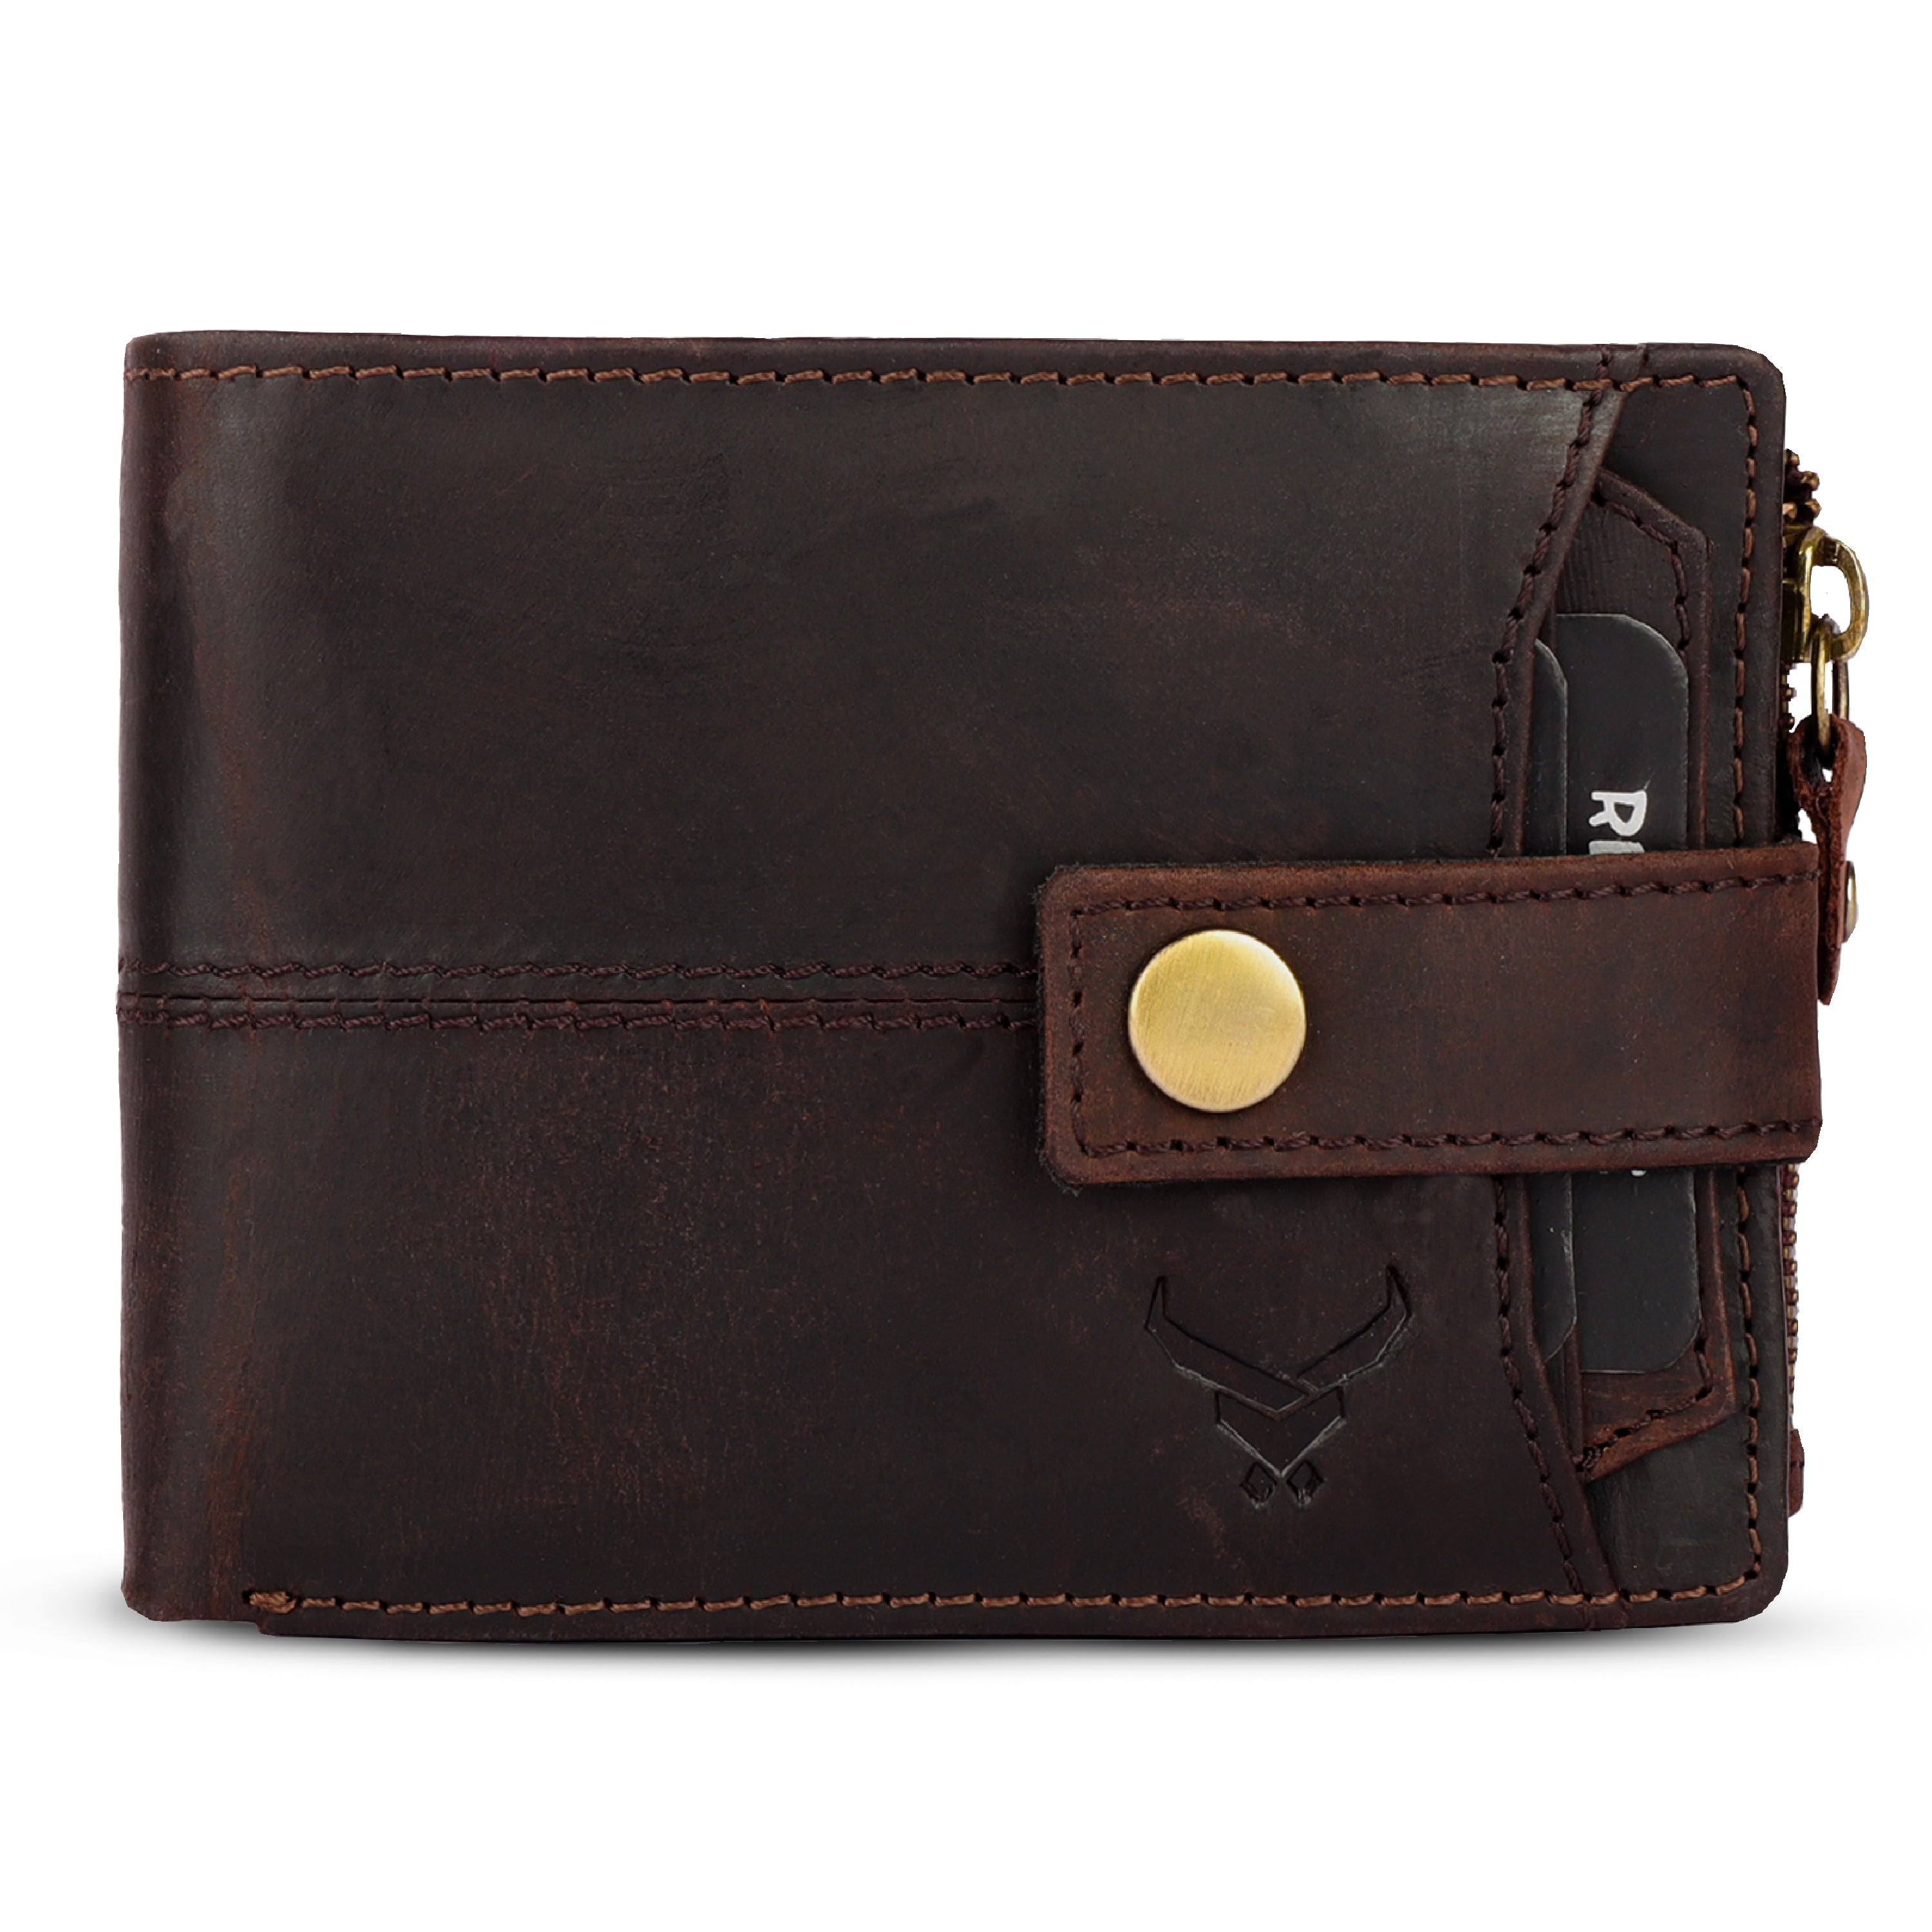 WOODLAND Men Brown Genuine Leather Wallet tan brown - Price in India |  Flipkart.com